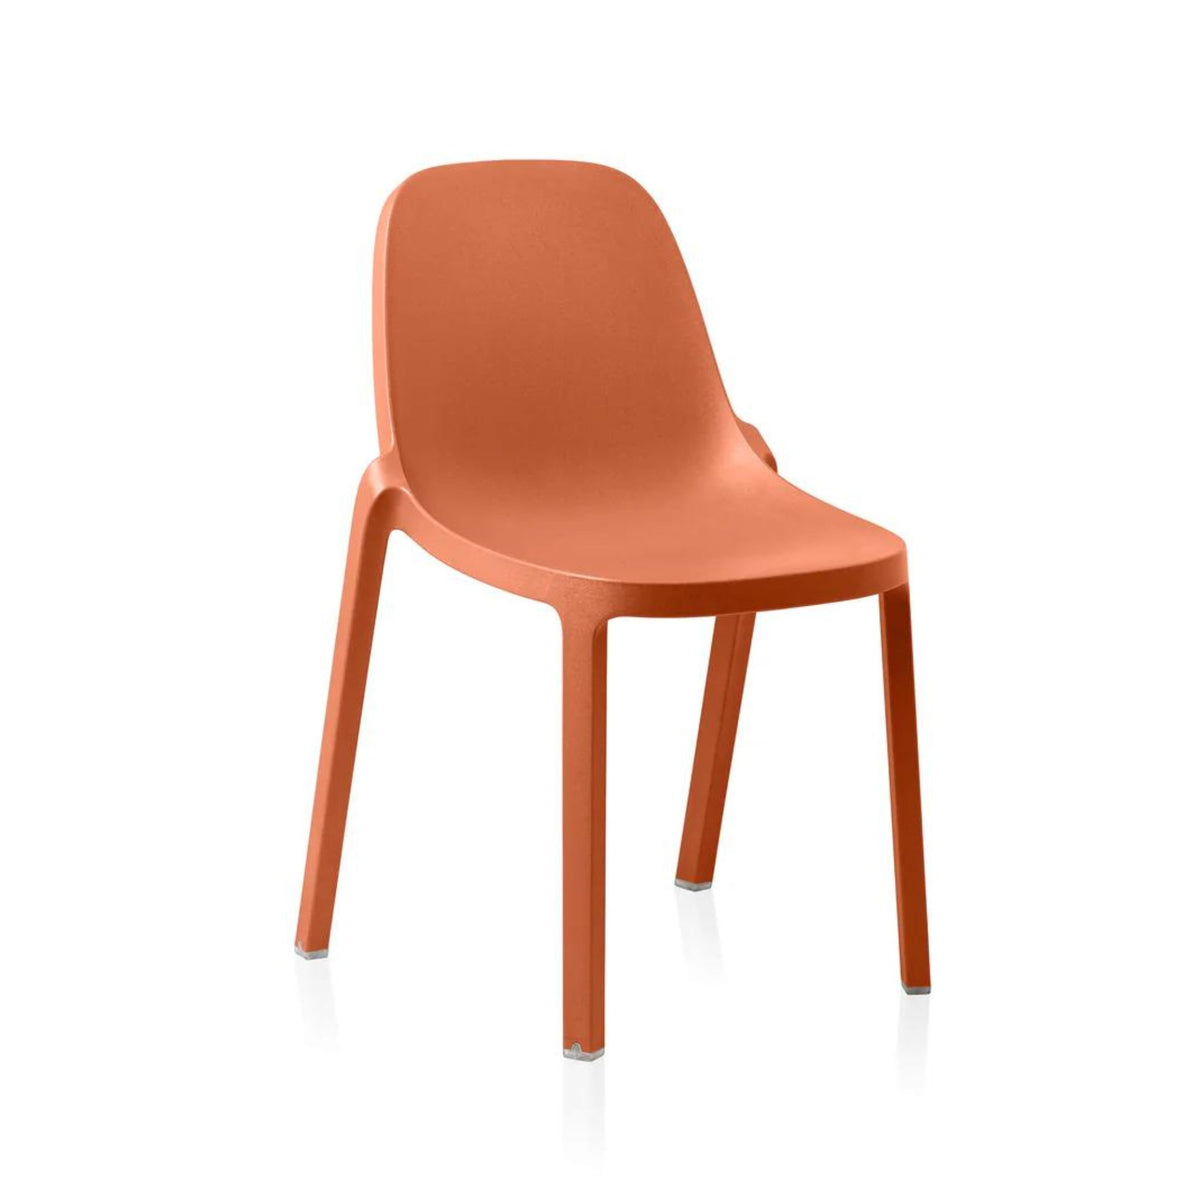 Emeco Broom Chair Terracotta Orange